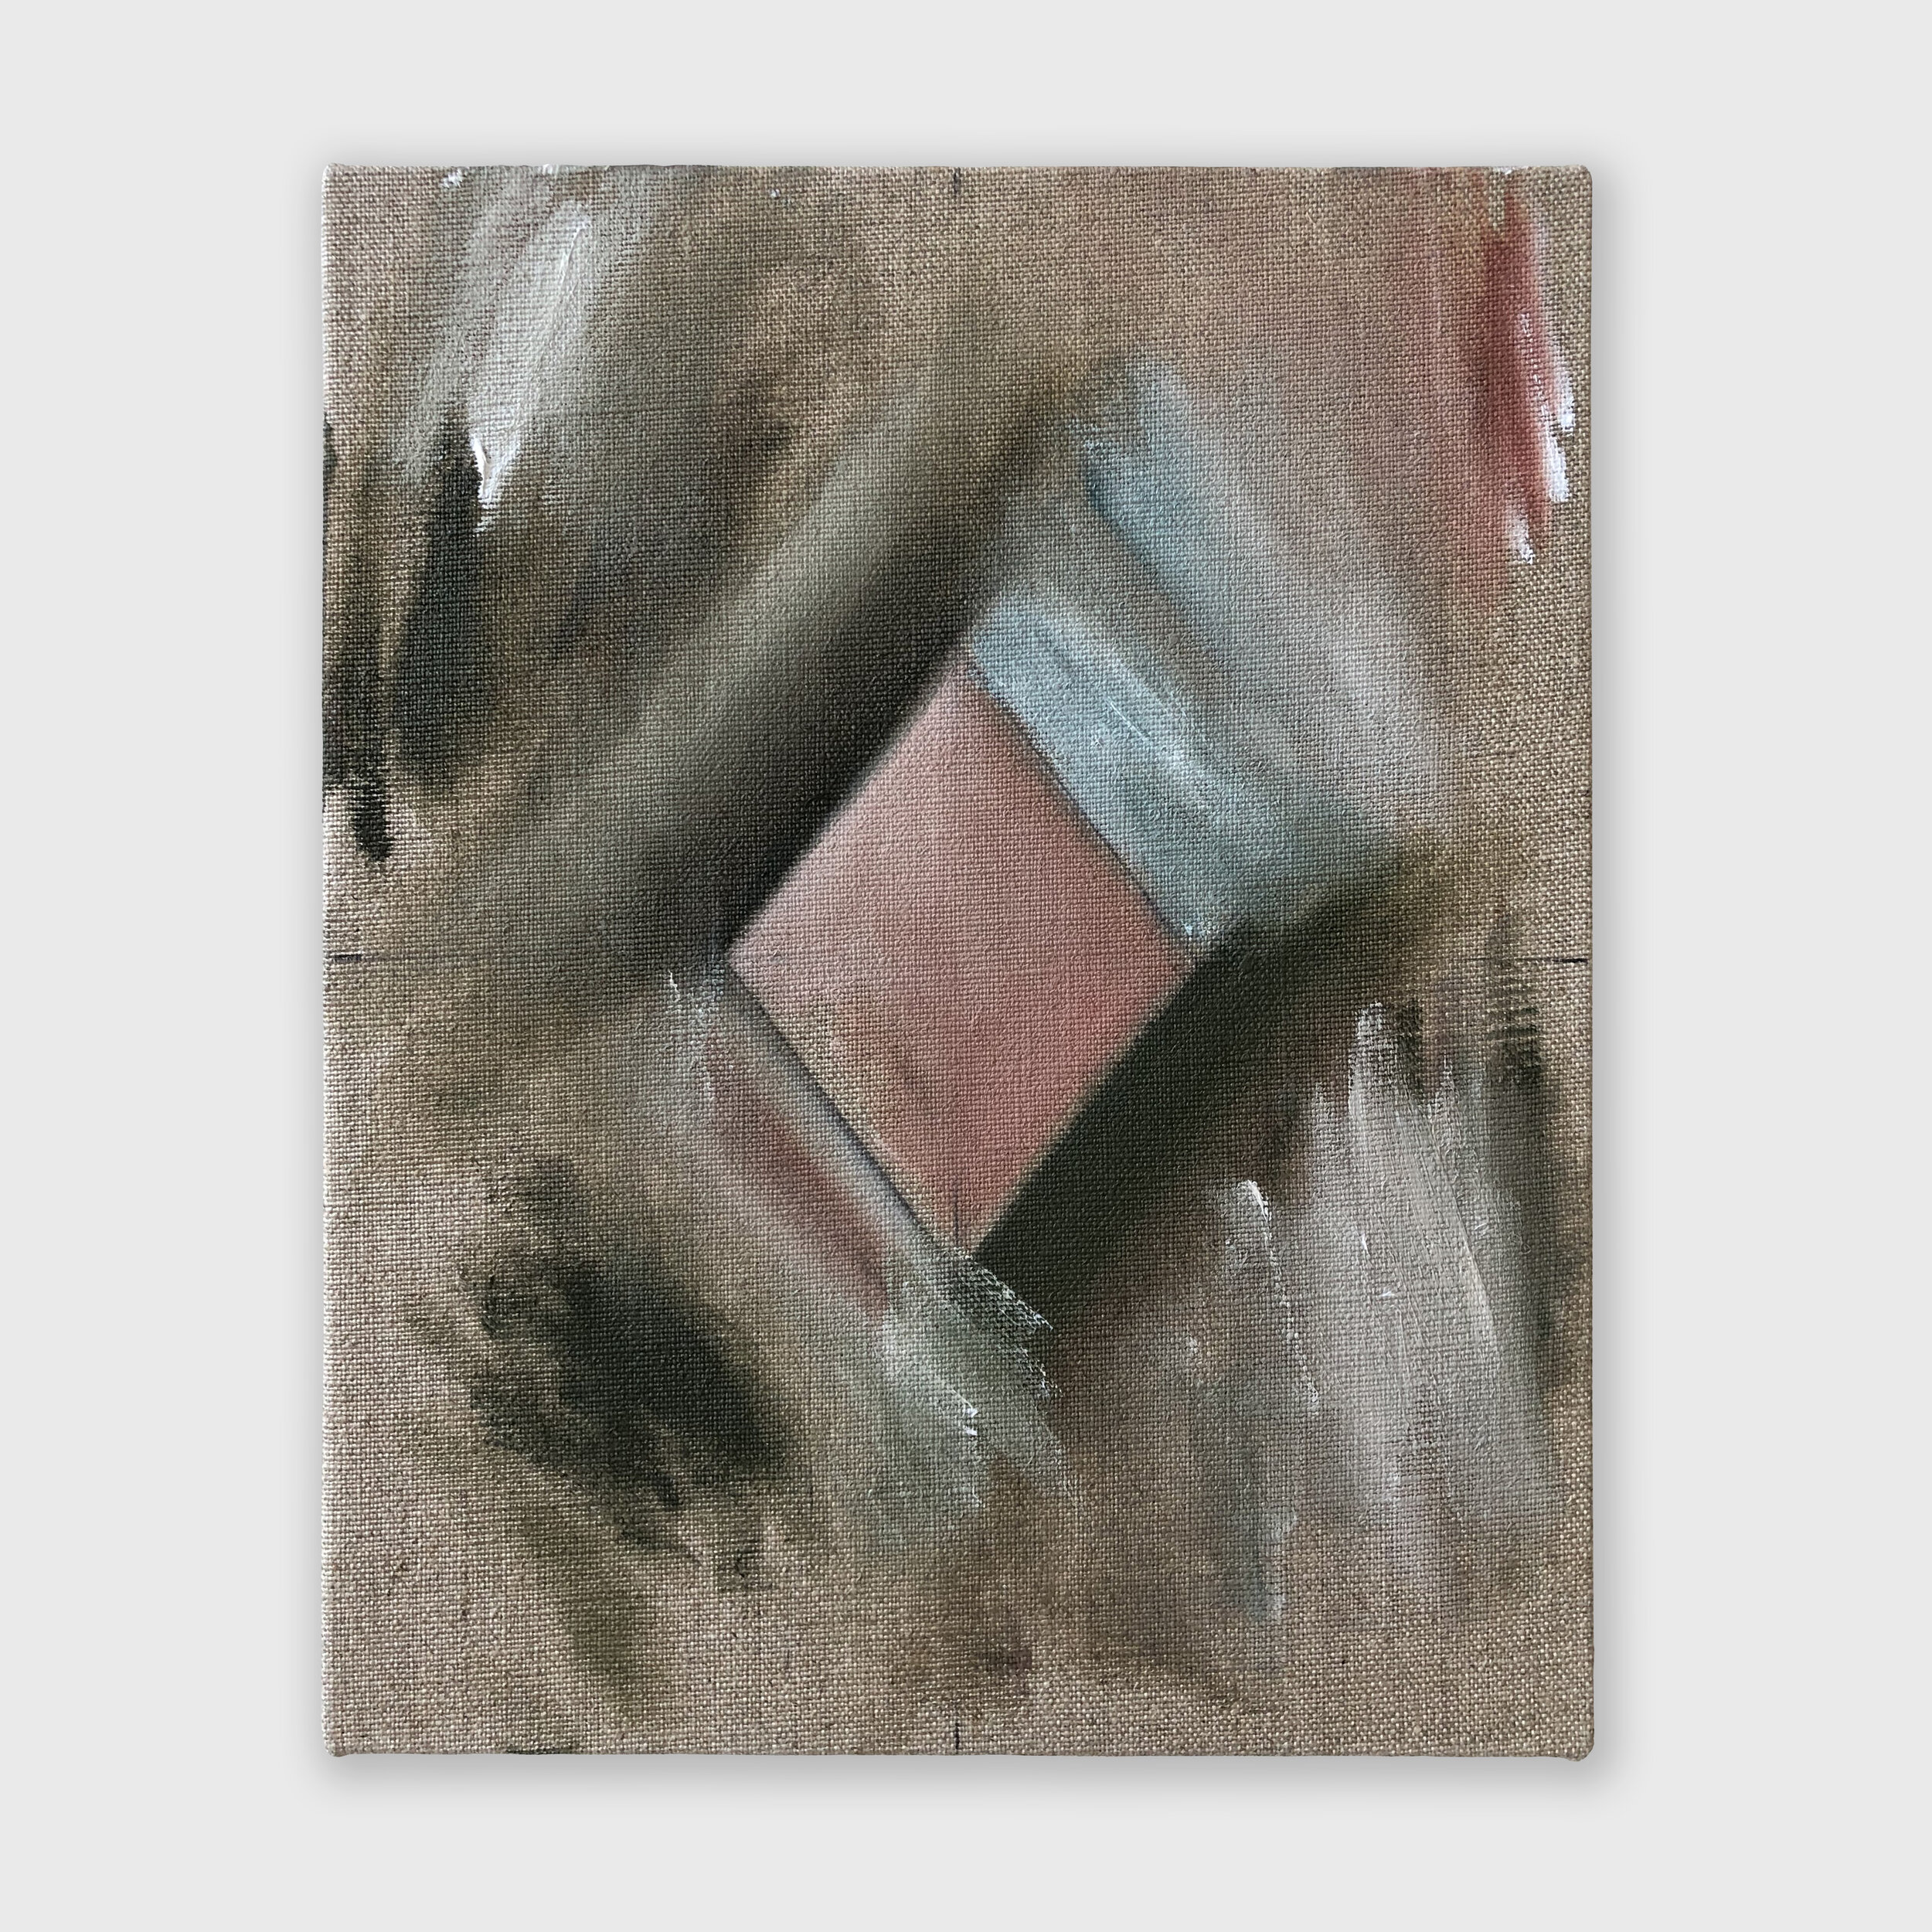 Untitled (Window 33), 2019 